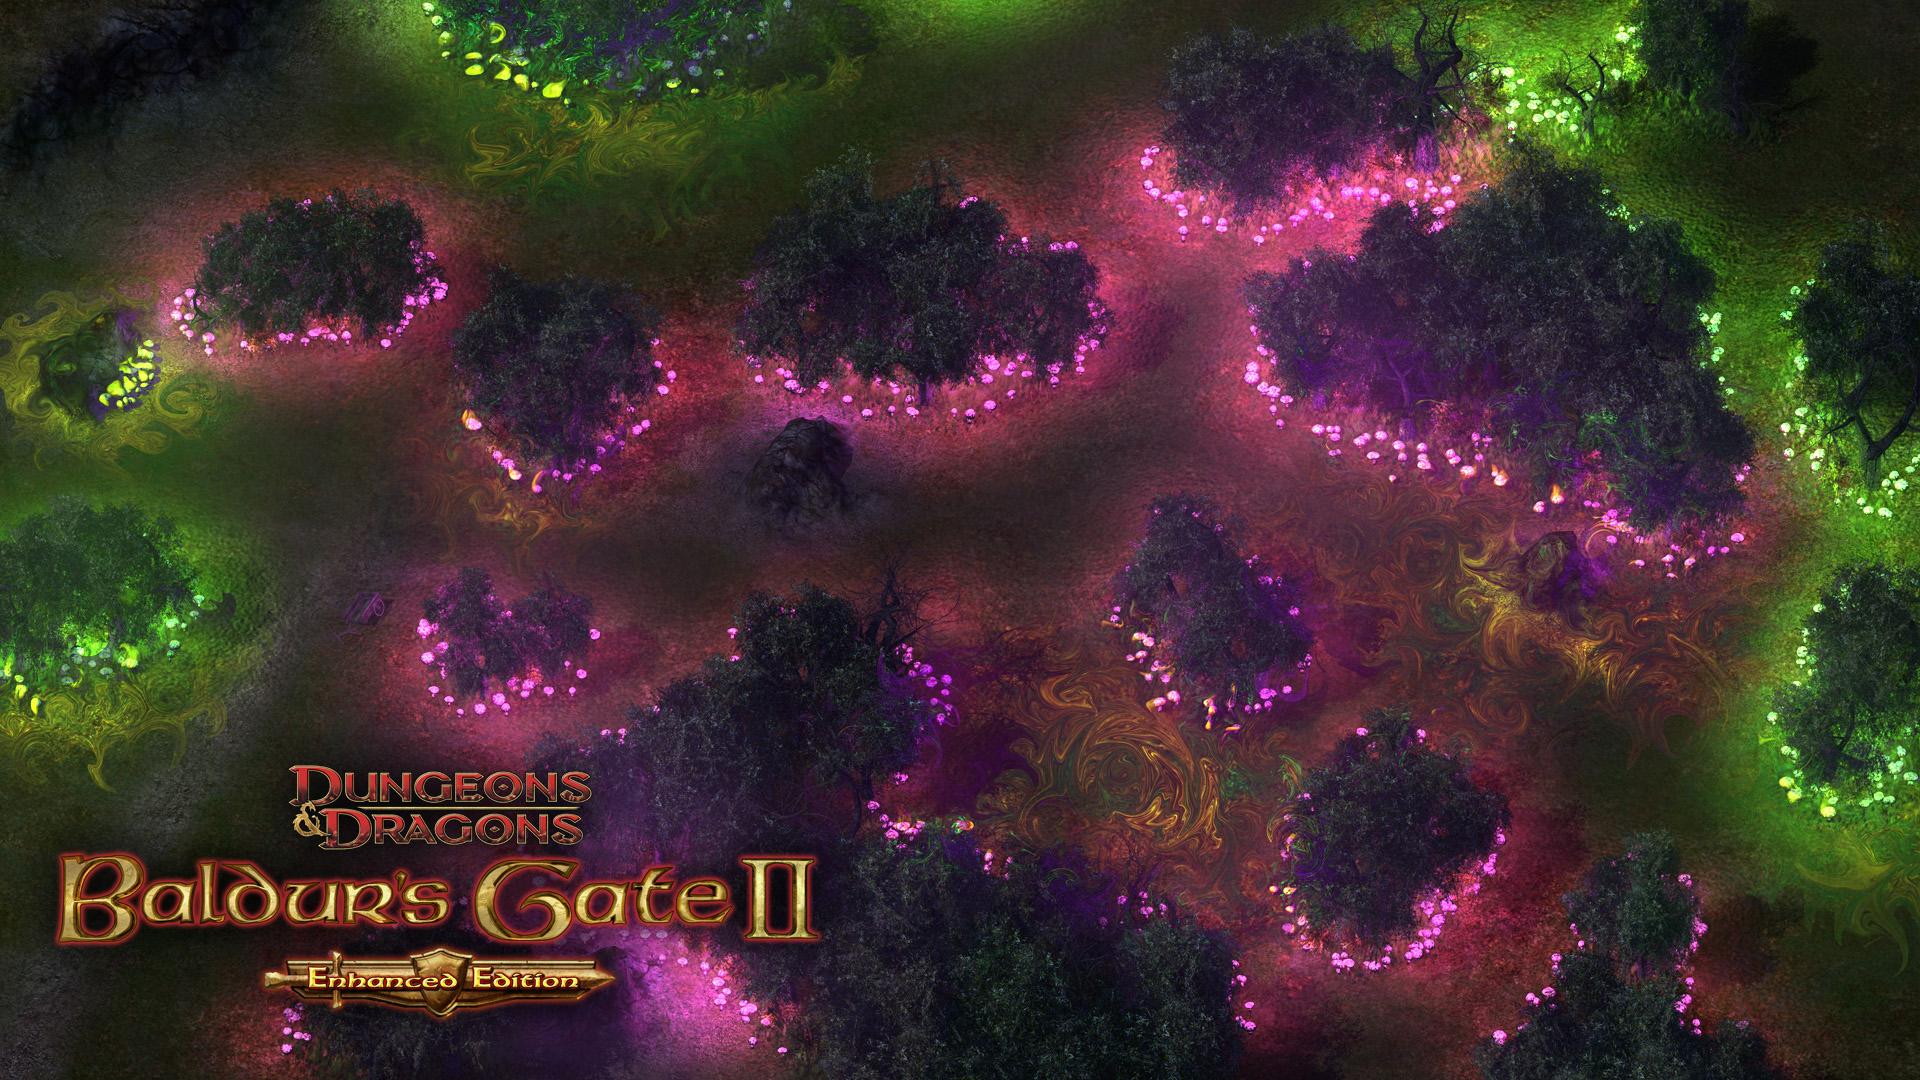 Check Out these Newly Enhanced Screenshots for Baldur's Gate